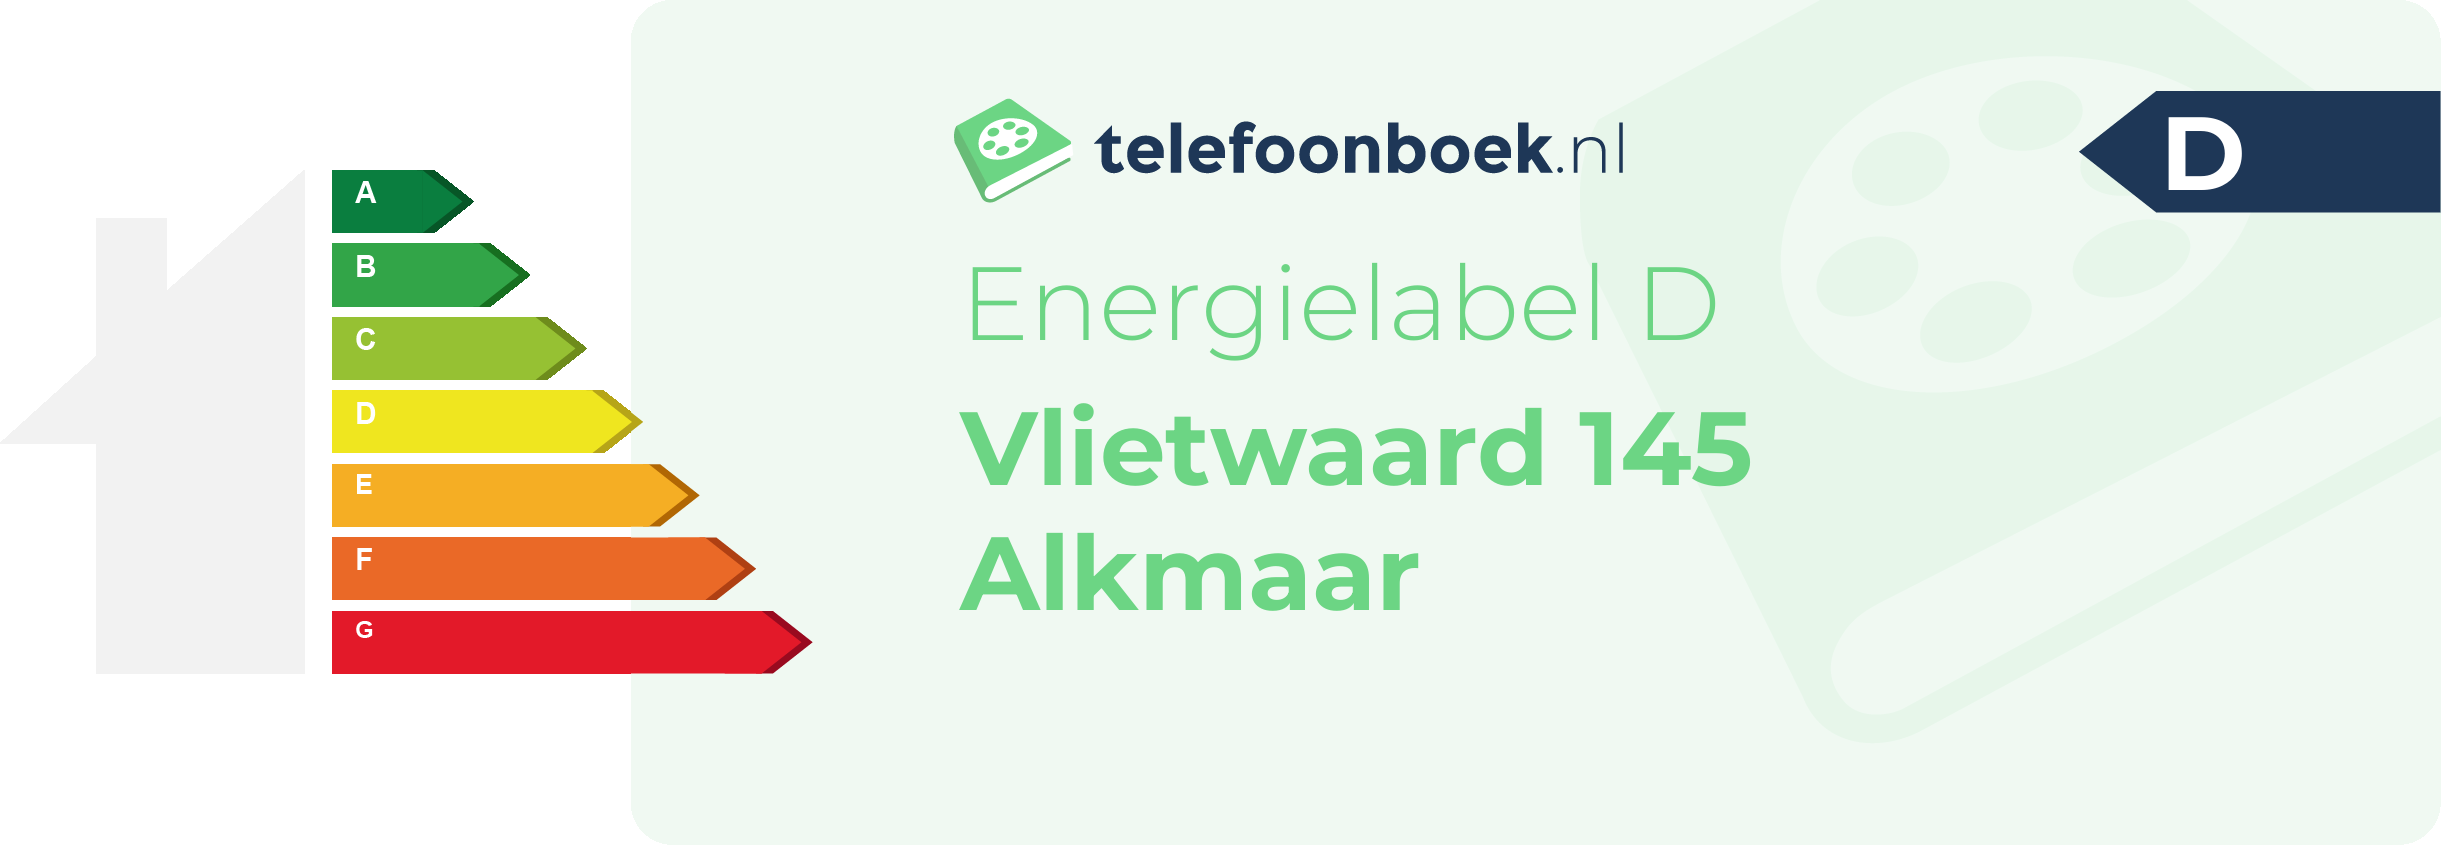 Energielabel Vlietwaard 145 Alkmaar